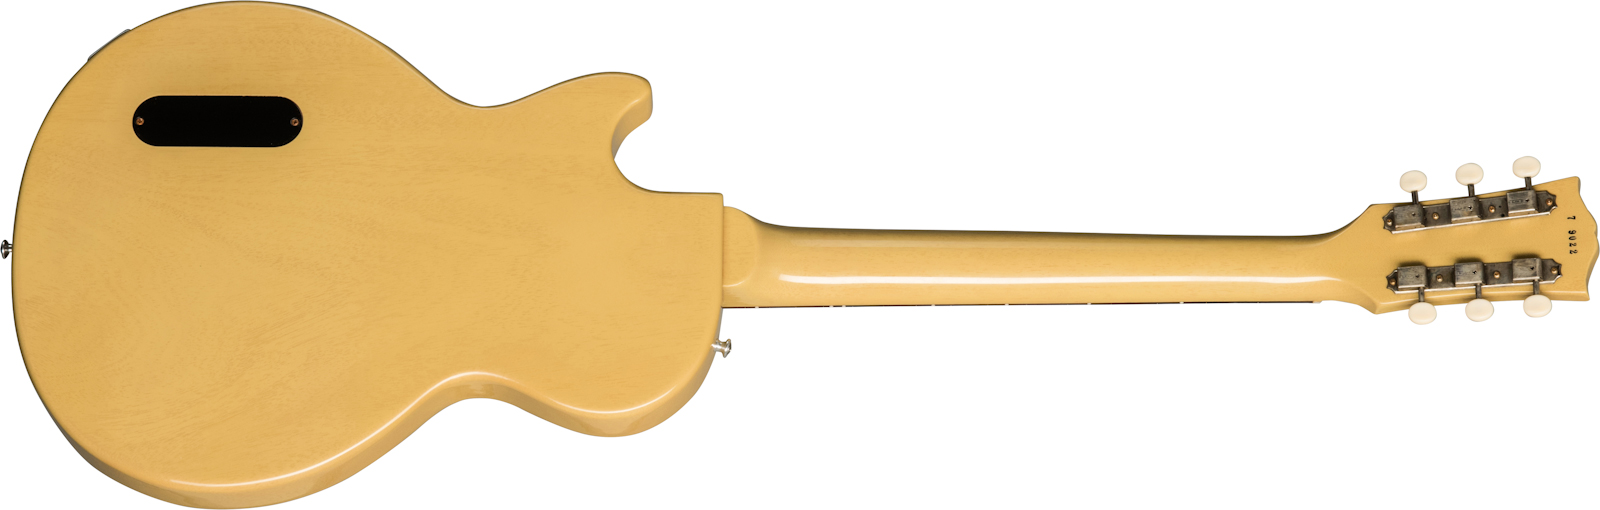 Gibson Custom Shop Les Paul Junior 1957 Single Cut Reissue P90 Ht Rw - Vos Tv Yellow - Single cut electric guitar - Variation 1